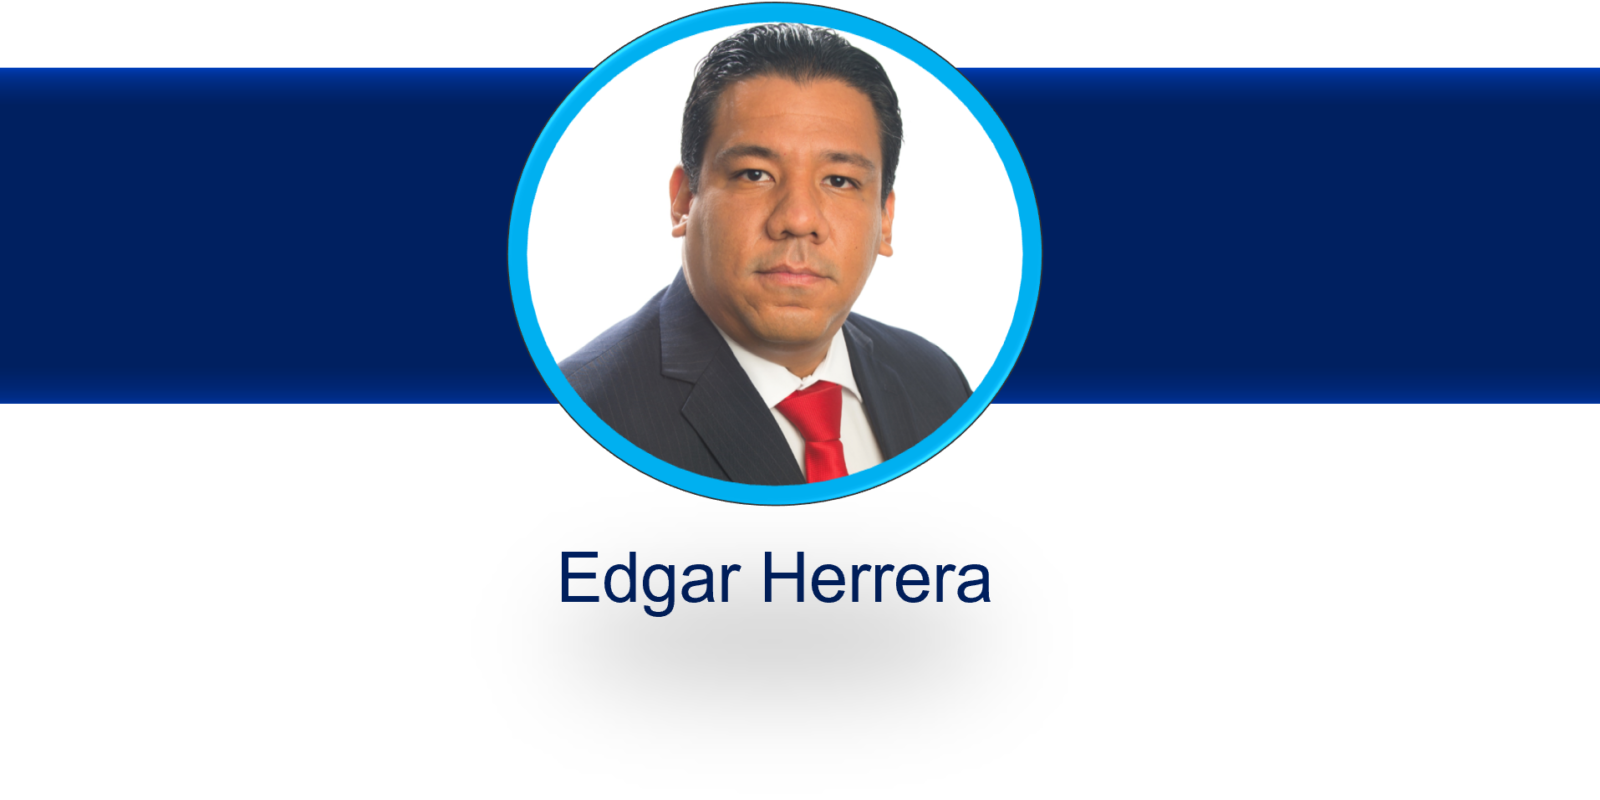 Edgar Herrera